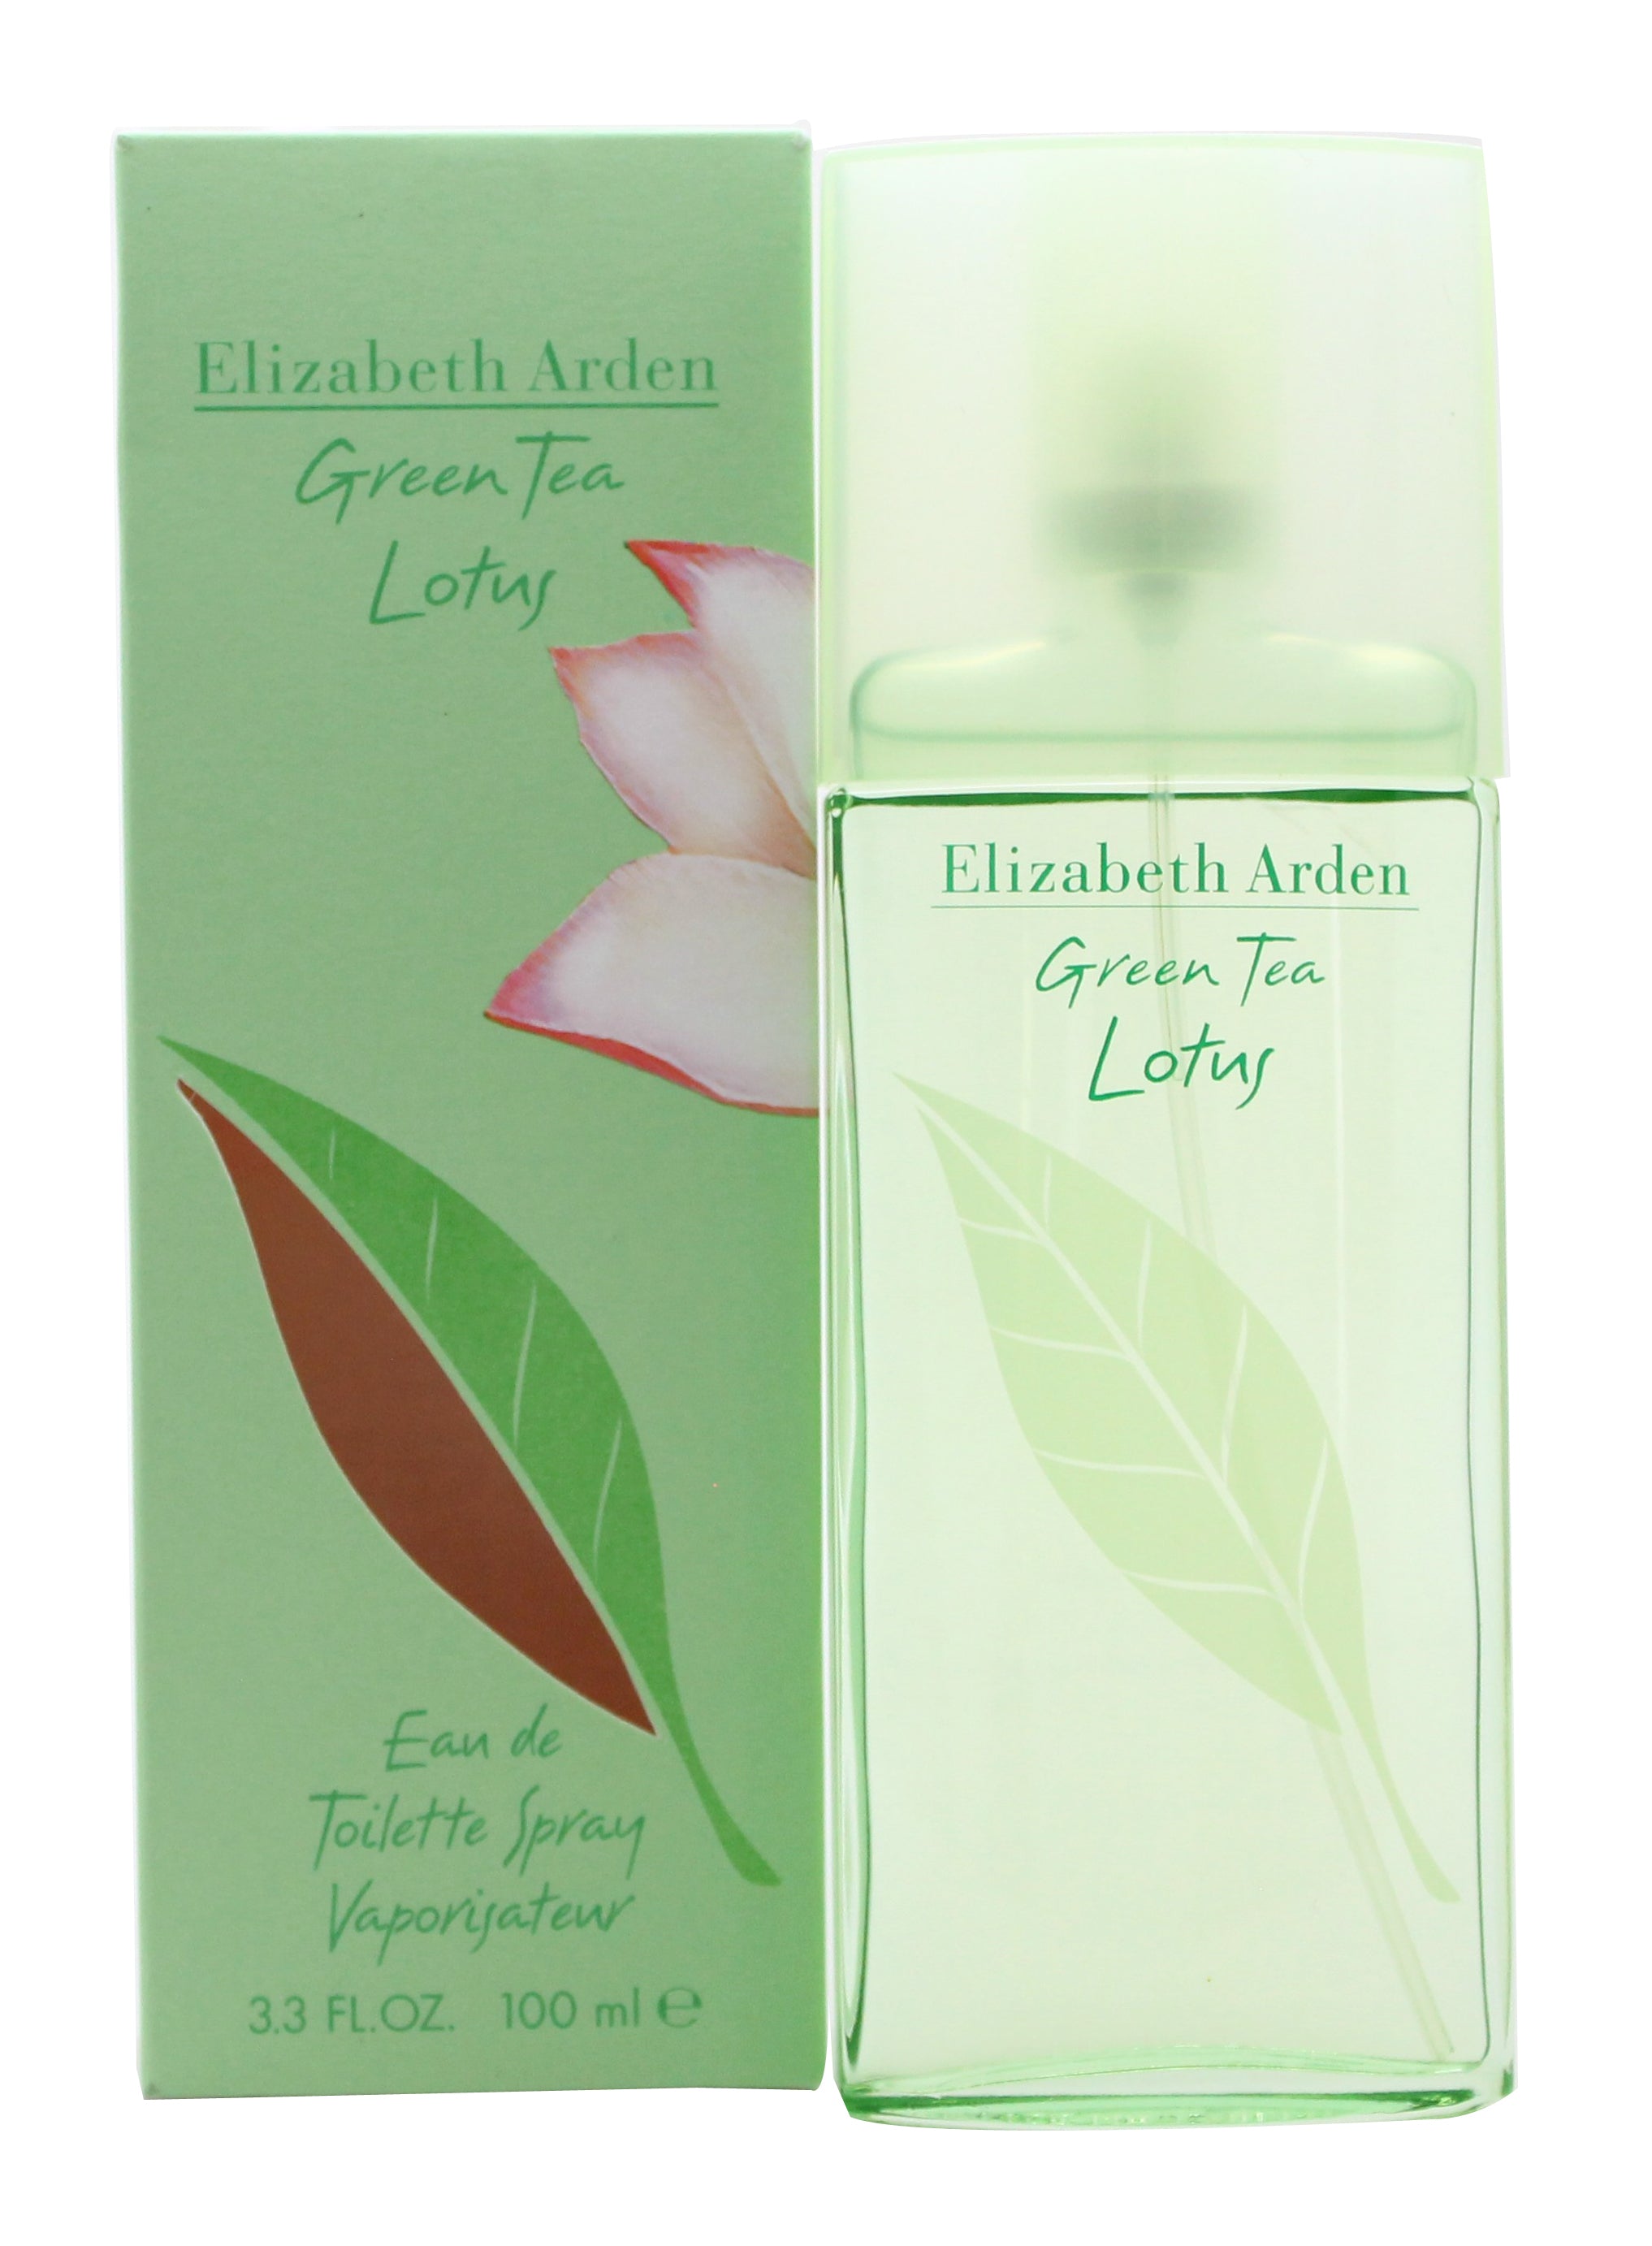 View Elizabeth Arden Green Tea Lotus Eau de Toilette 100ml Spray information